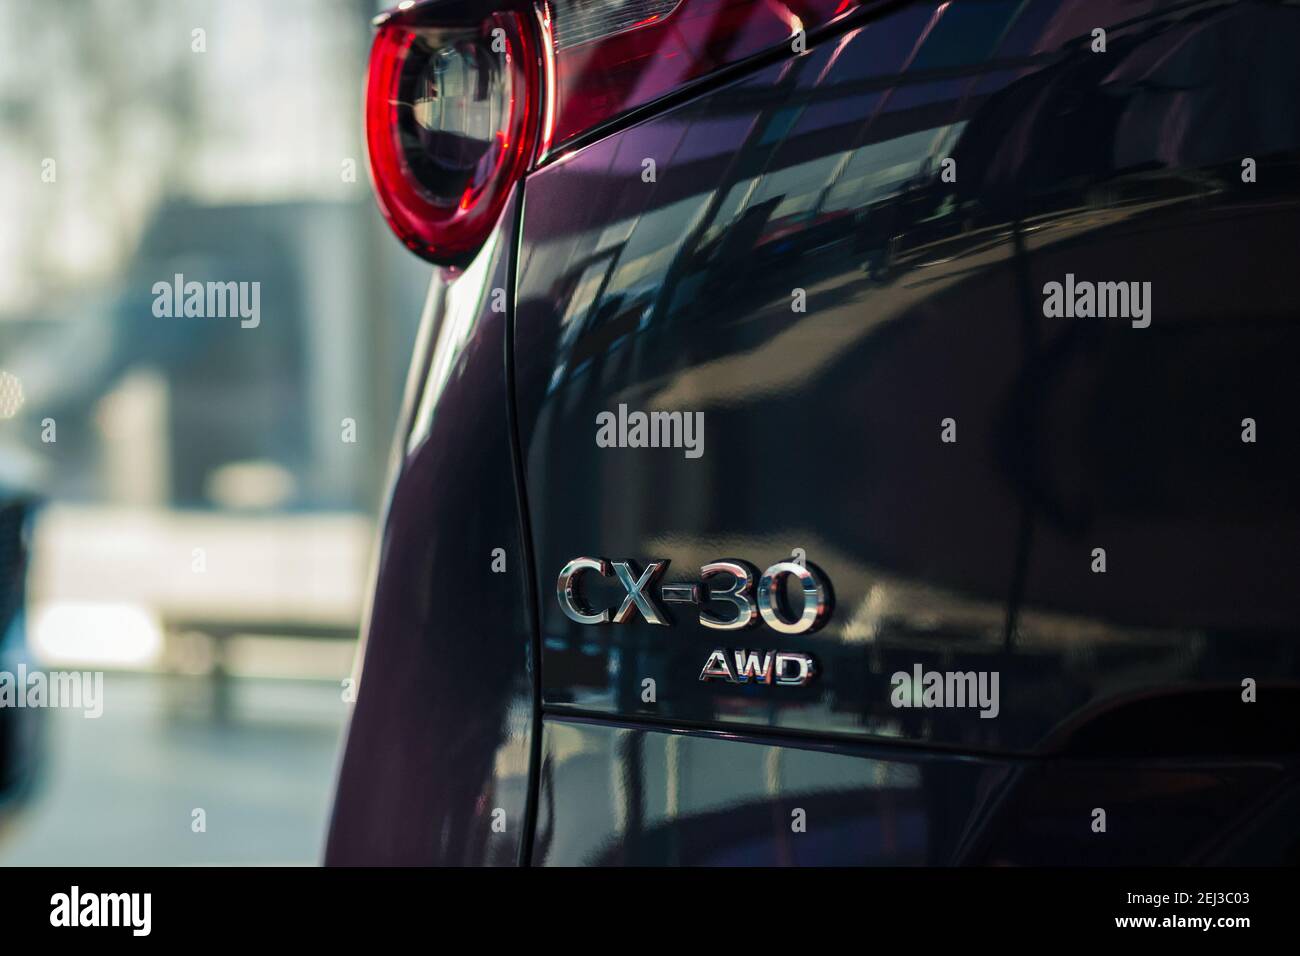 Mazda CX-30 AWD emblem on car back door closeup, Moscow, 18 Feb 2021 Stock Photo